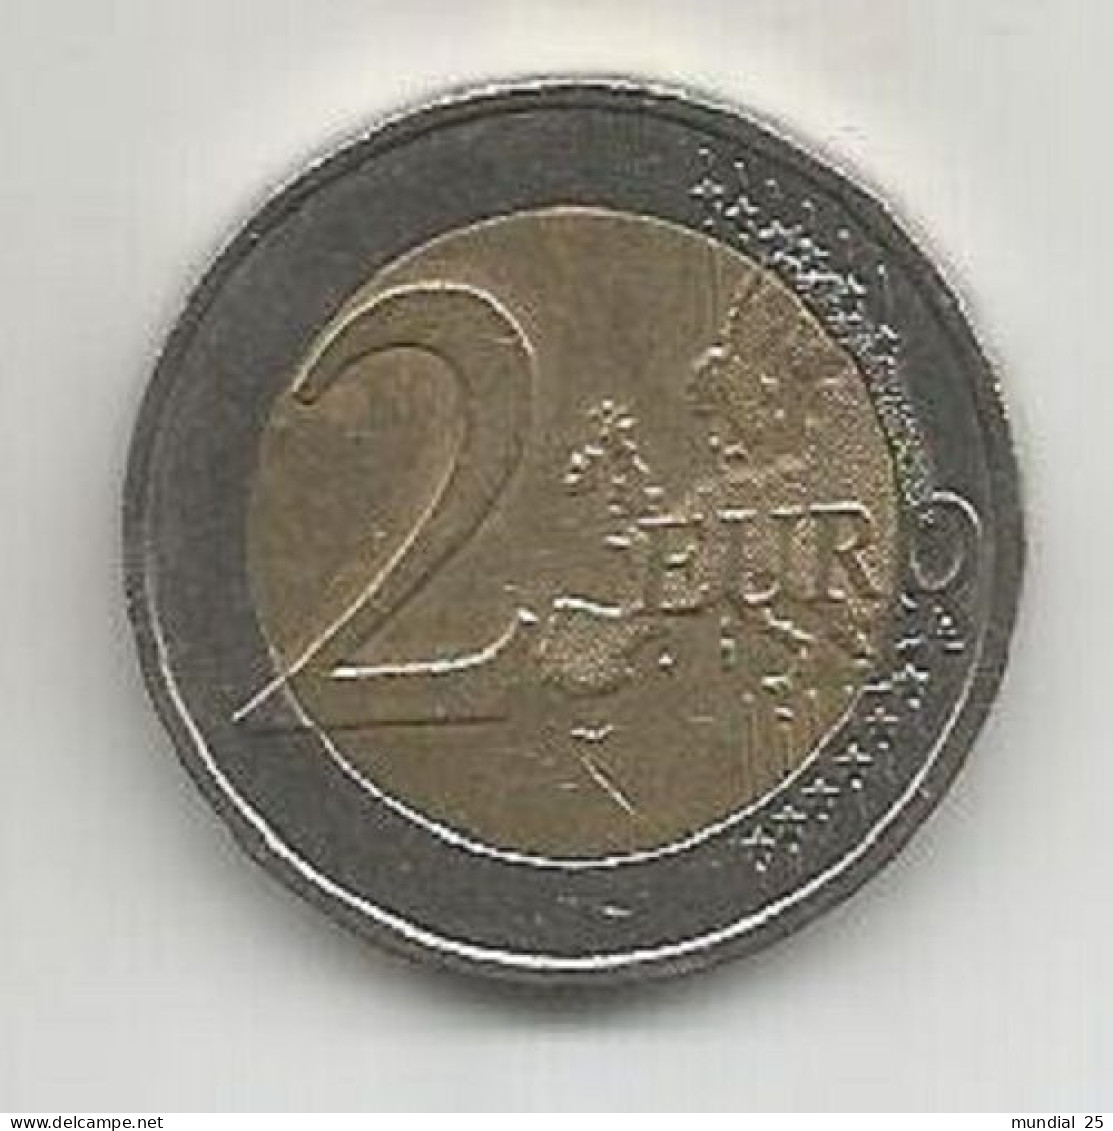 FRANCE 2 EURO 2012 - EURO COINAGE, 10th ANNIVERSARY - Francia